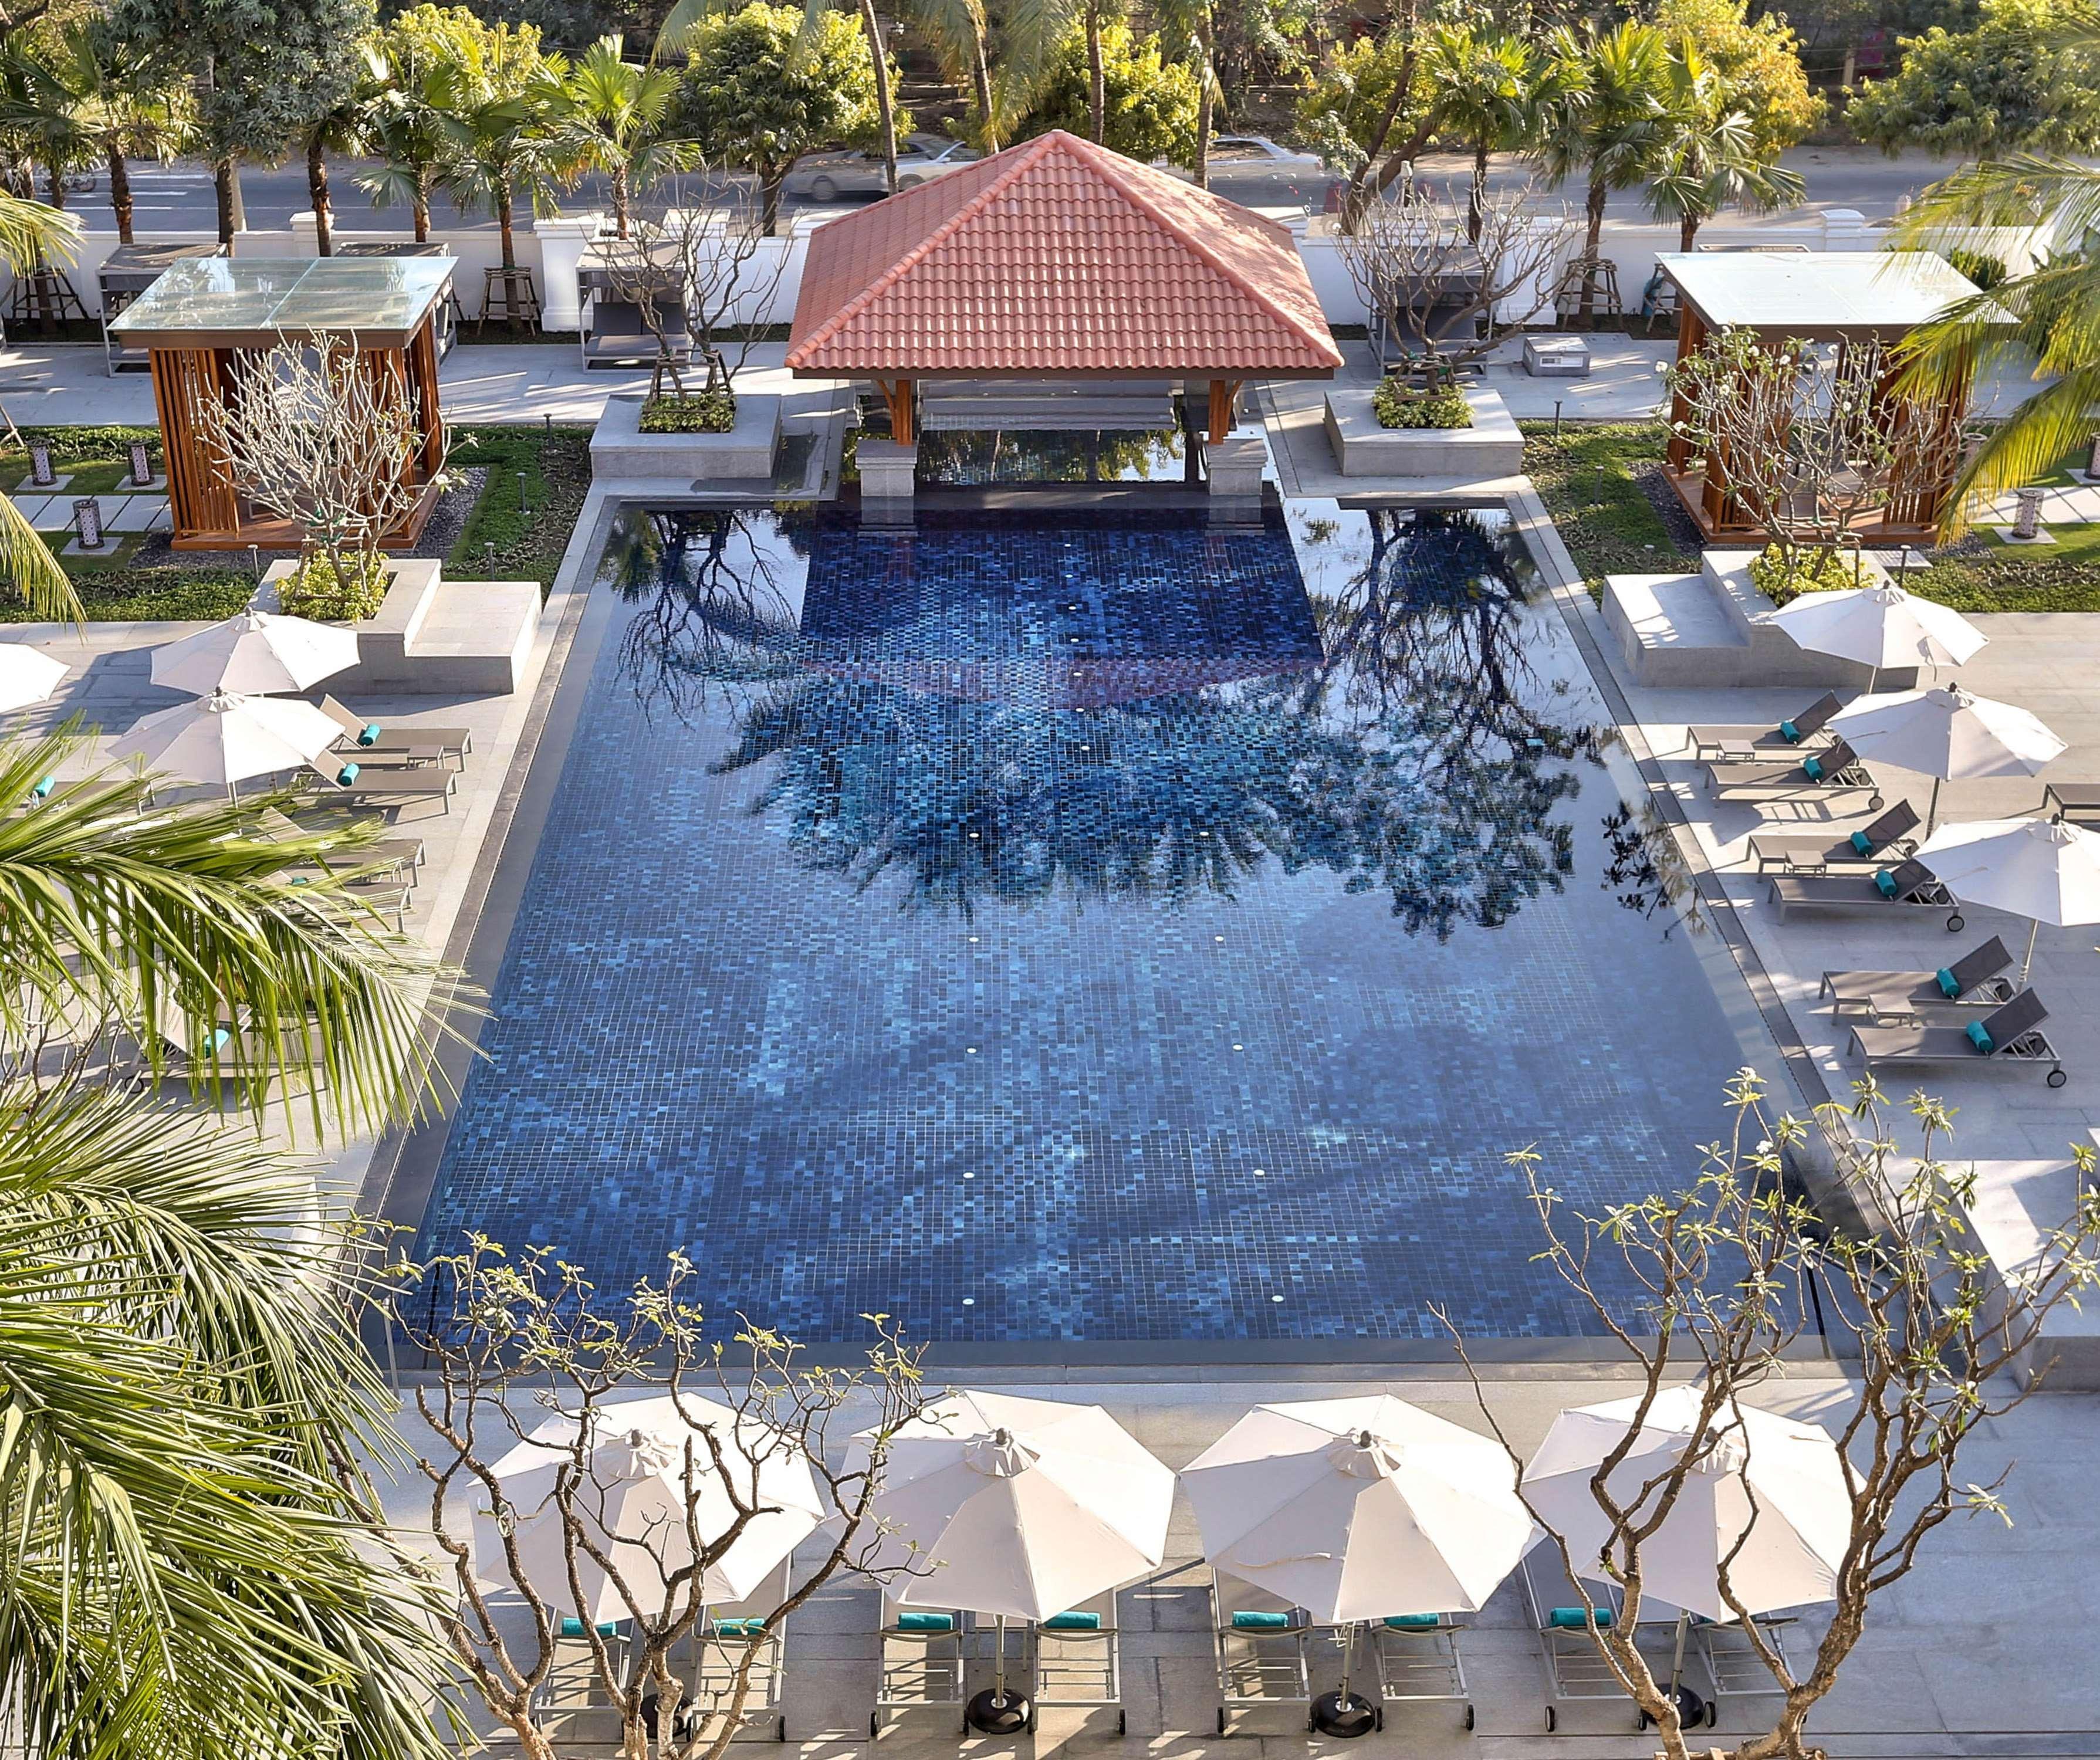 Hilton Mandalay Hotel Exterior photo